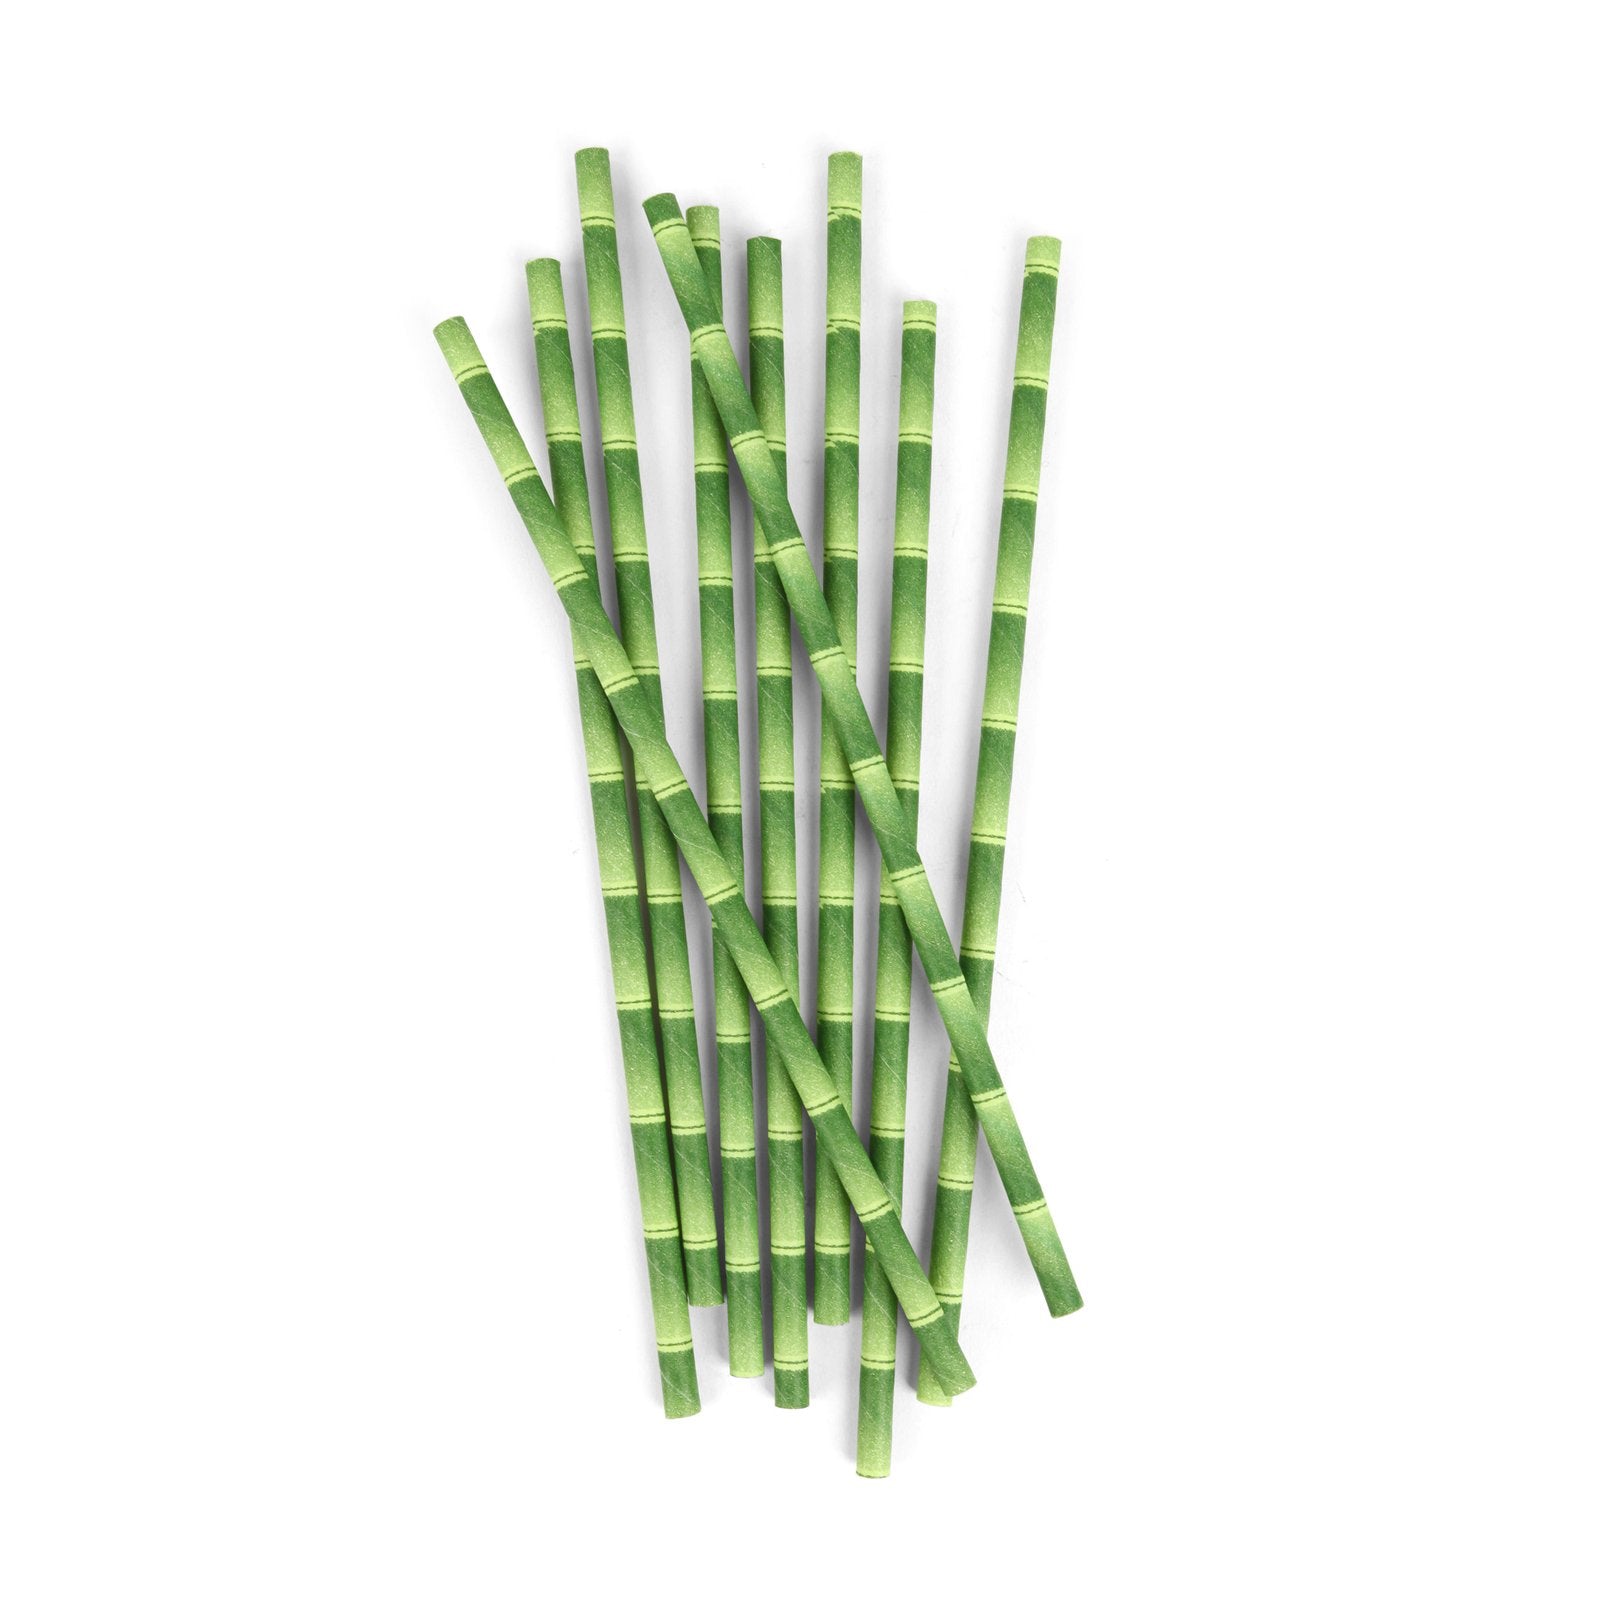 Bamboo Print Paper Straws